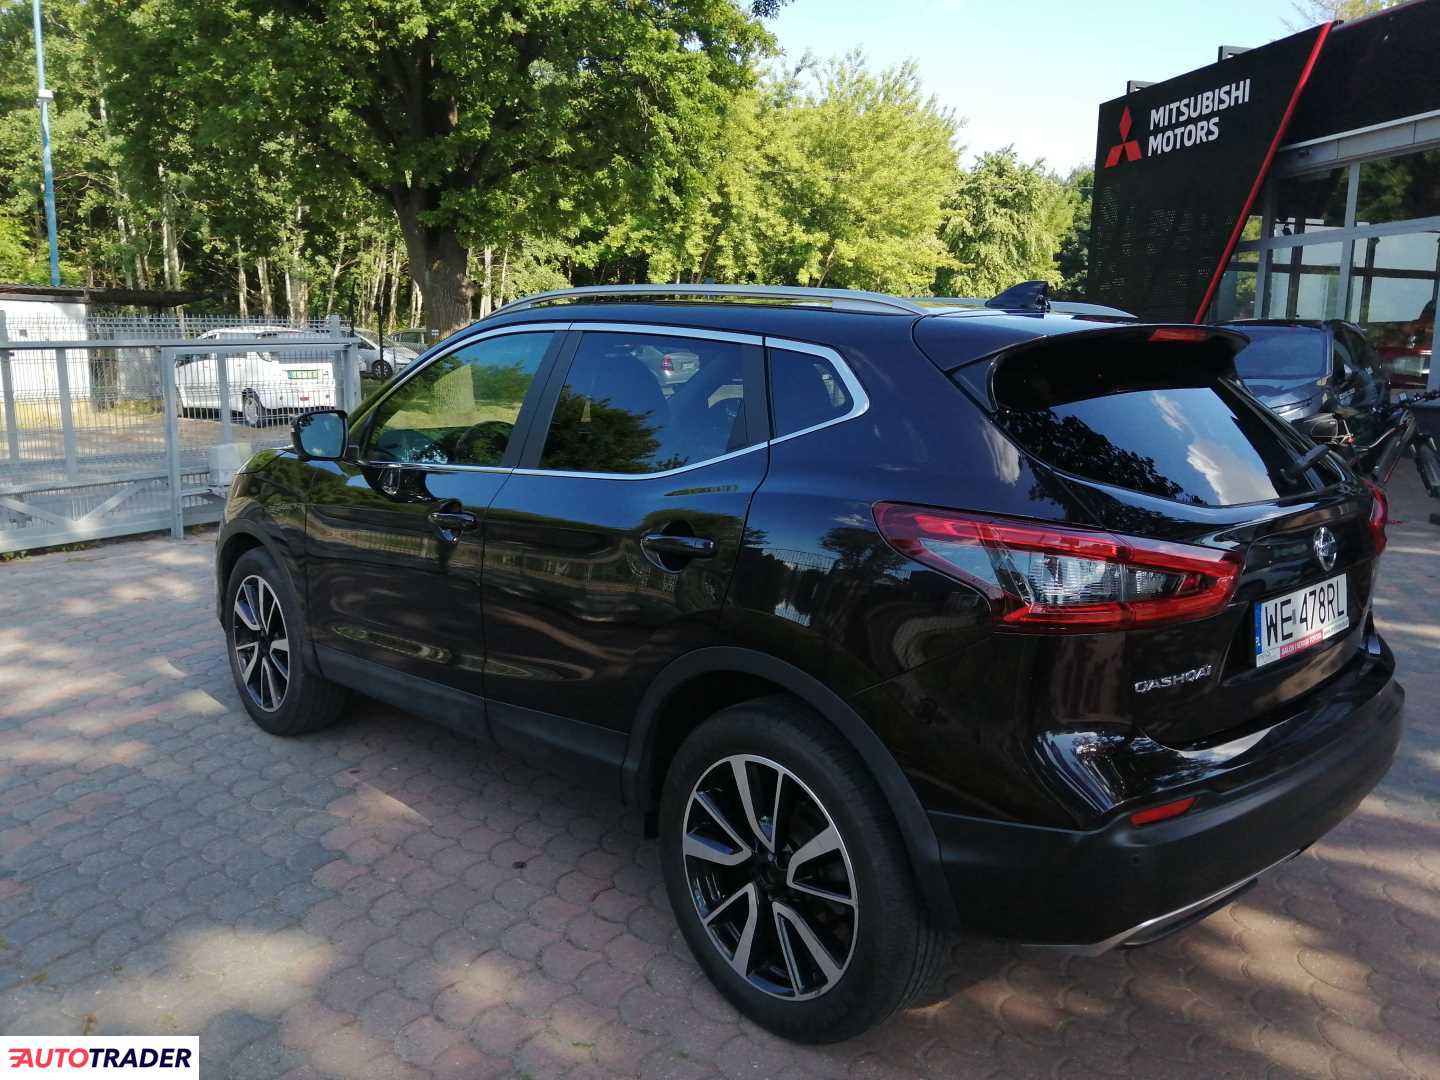 Nissan Qashqai 1.6 benzyna 163 KM 2017r. (Łódź) archiwum